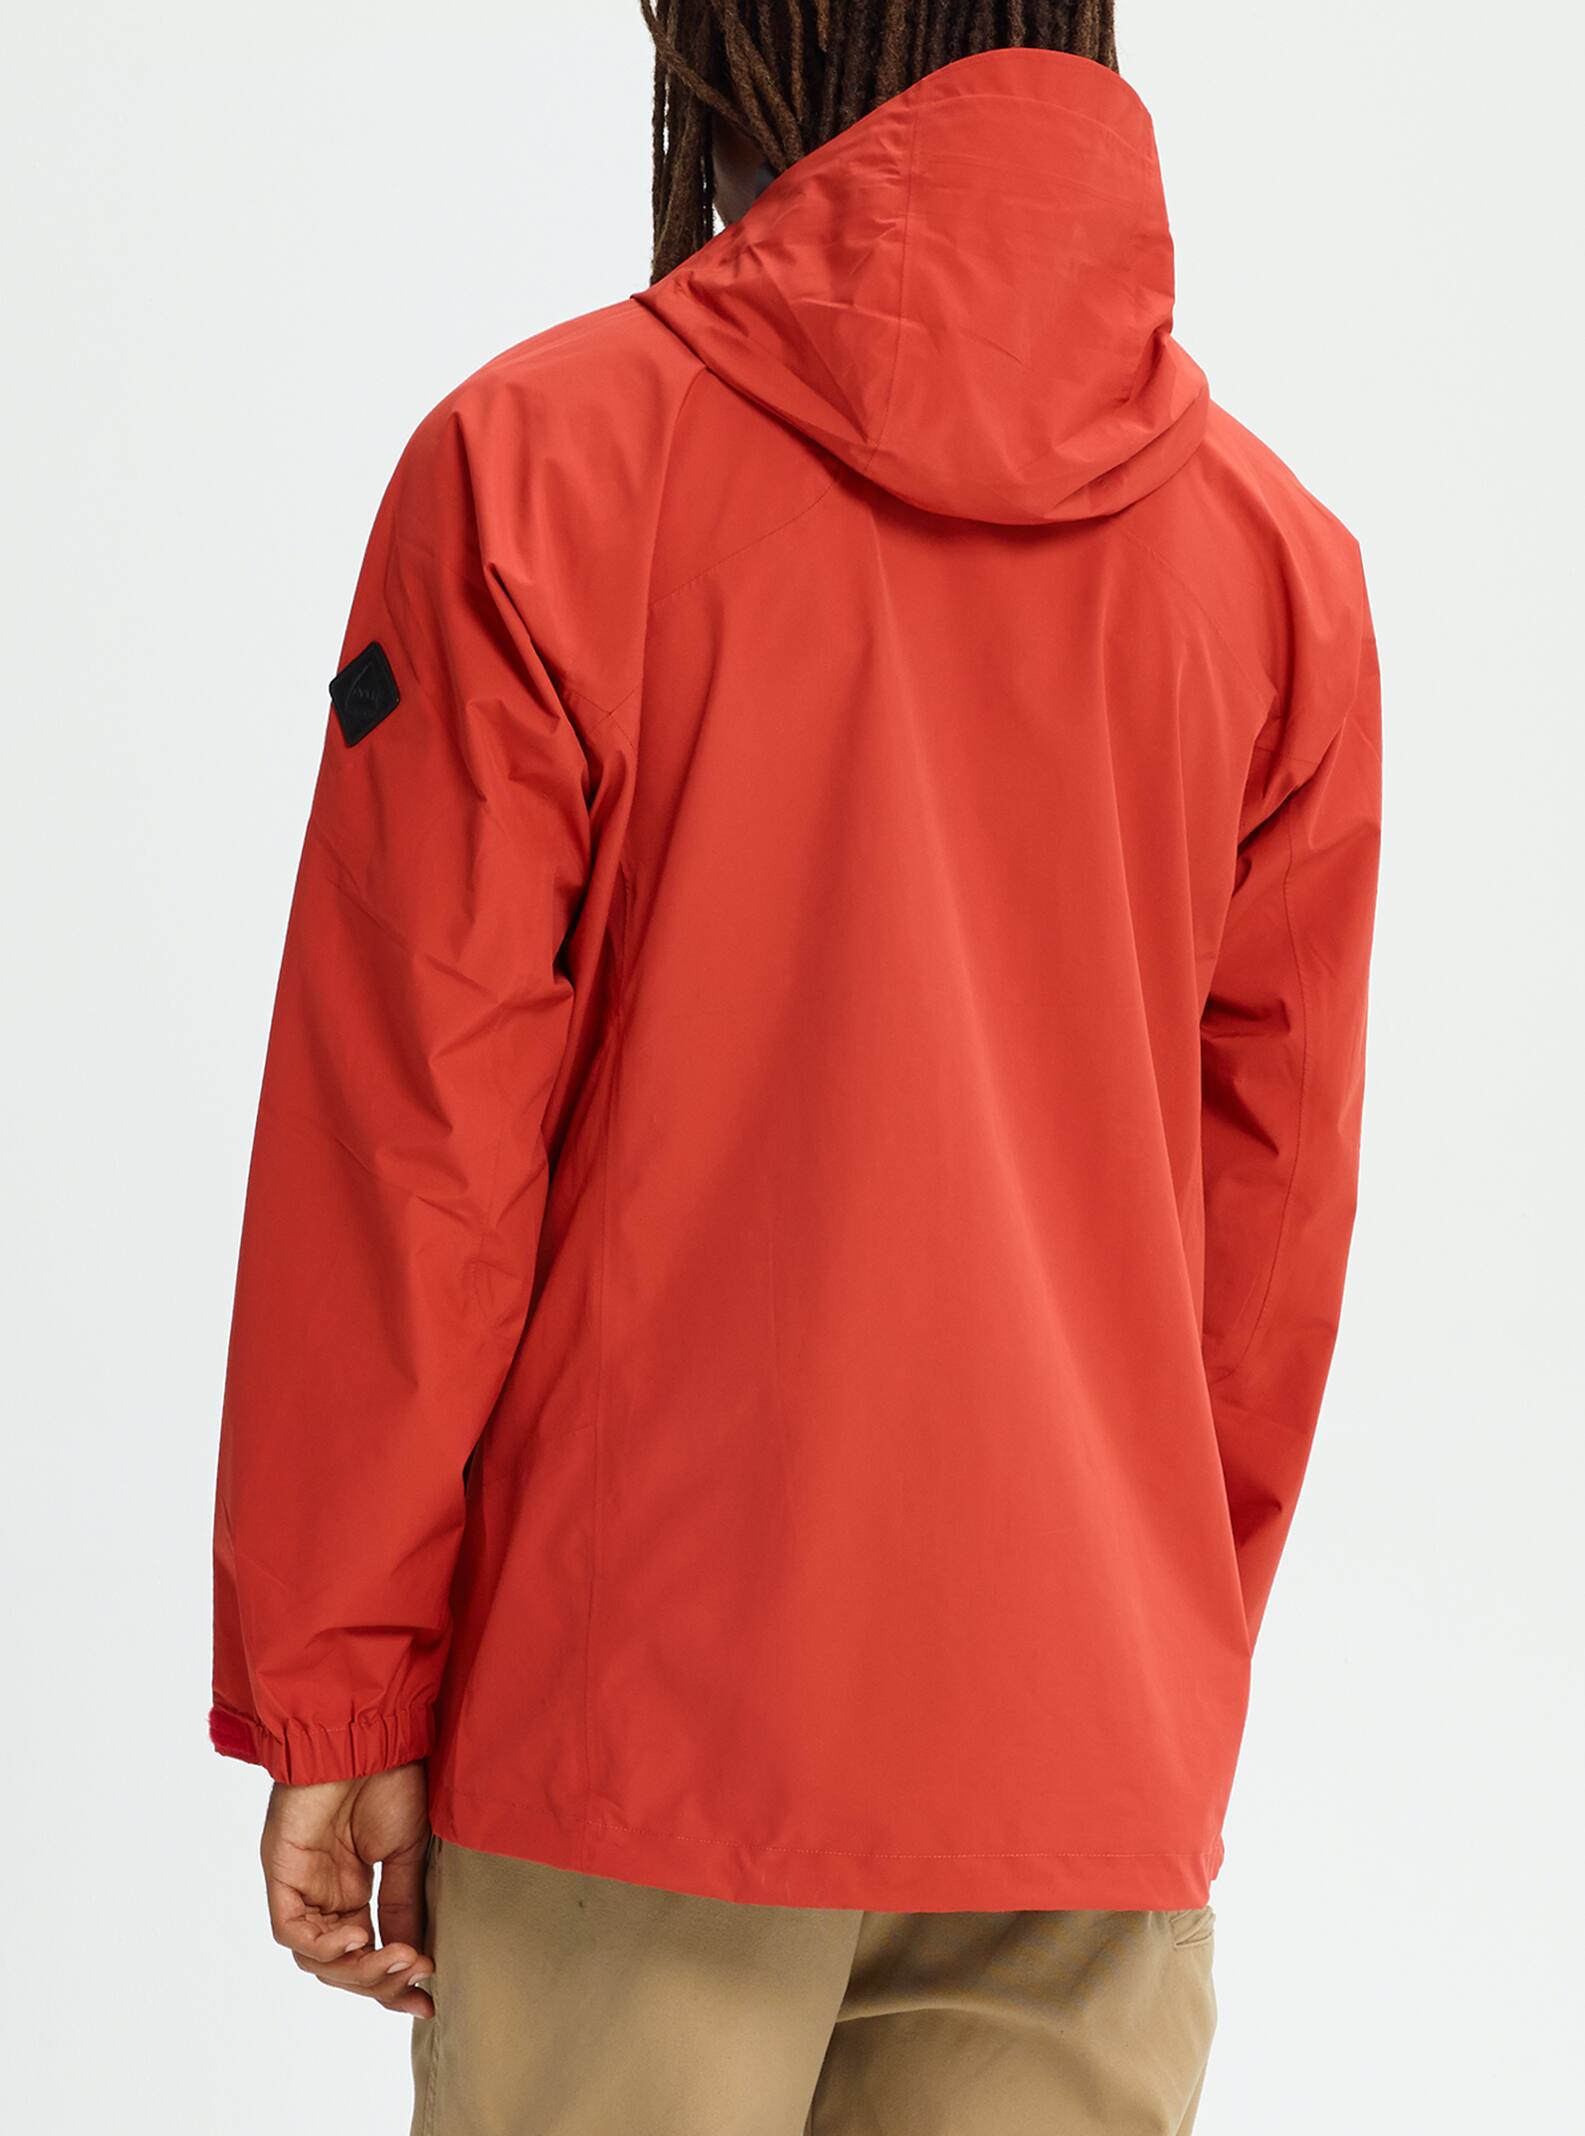 Men's Burton GORE-TEX Packrite Rain Jacket | Burton.com Fall 2019 US